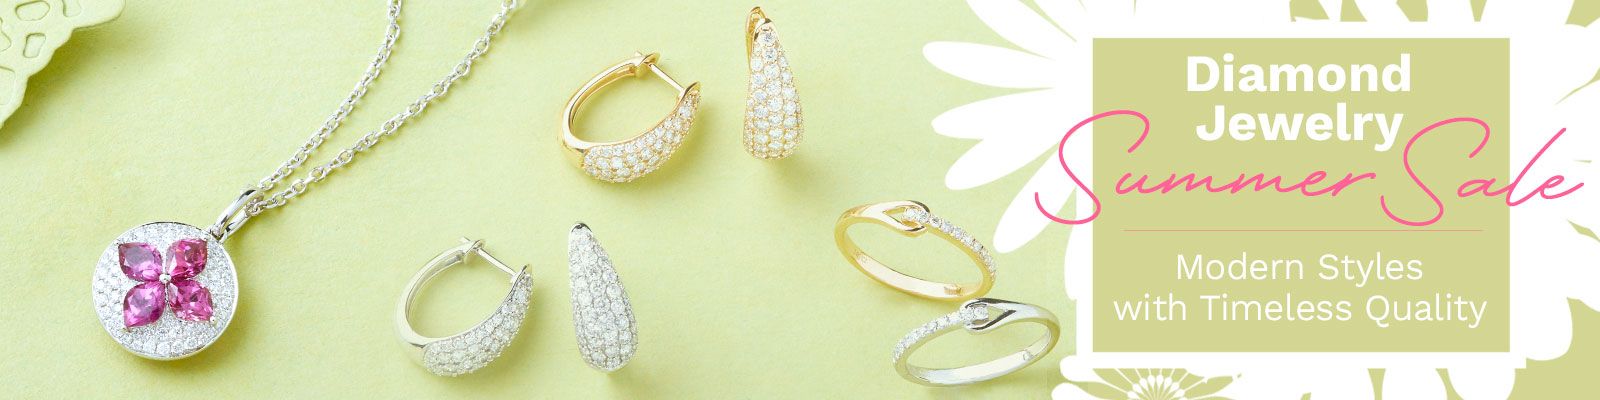 Diamond Jewelry Summer Sale 211-904 211-905 211-129